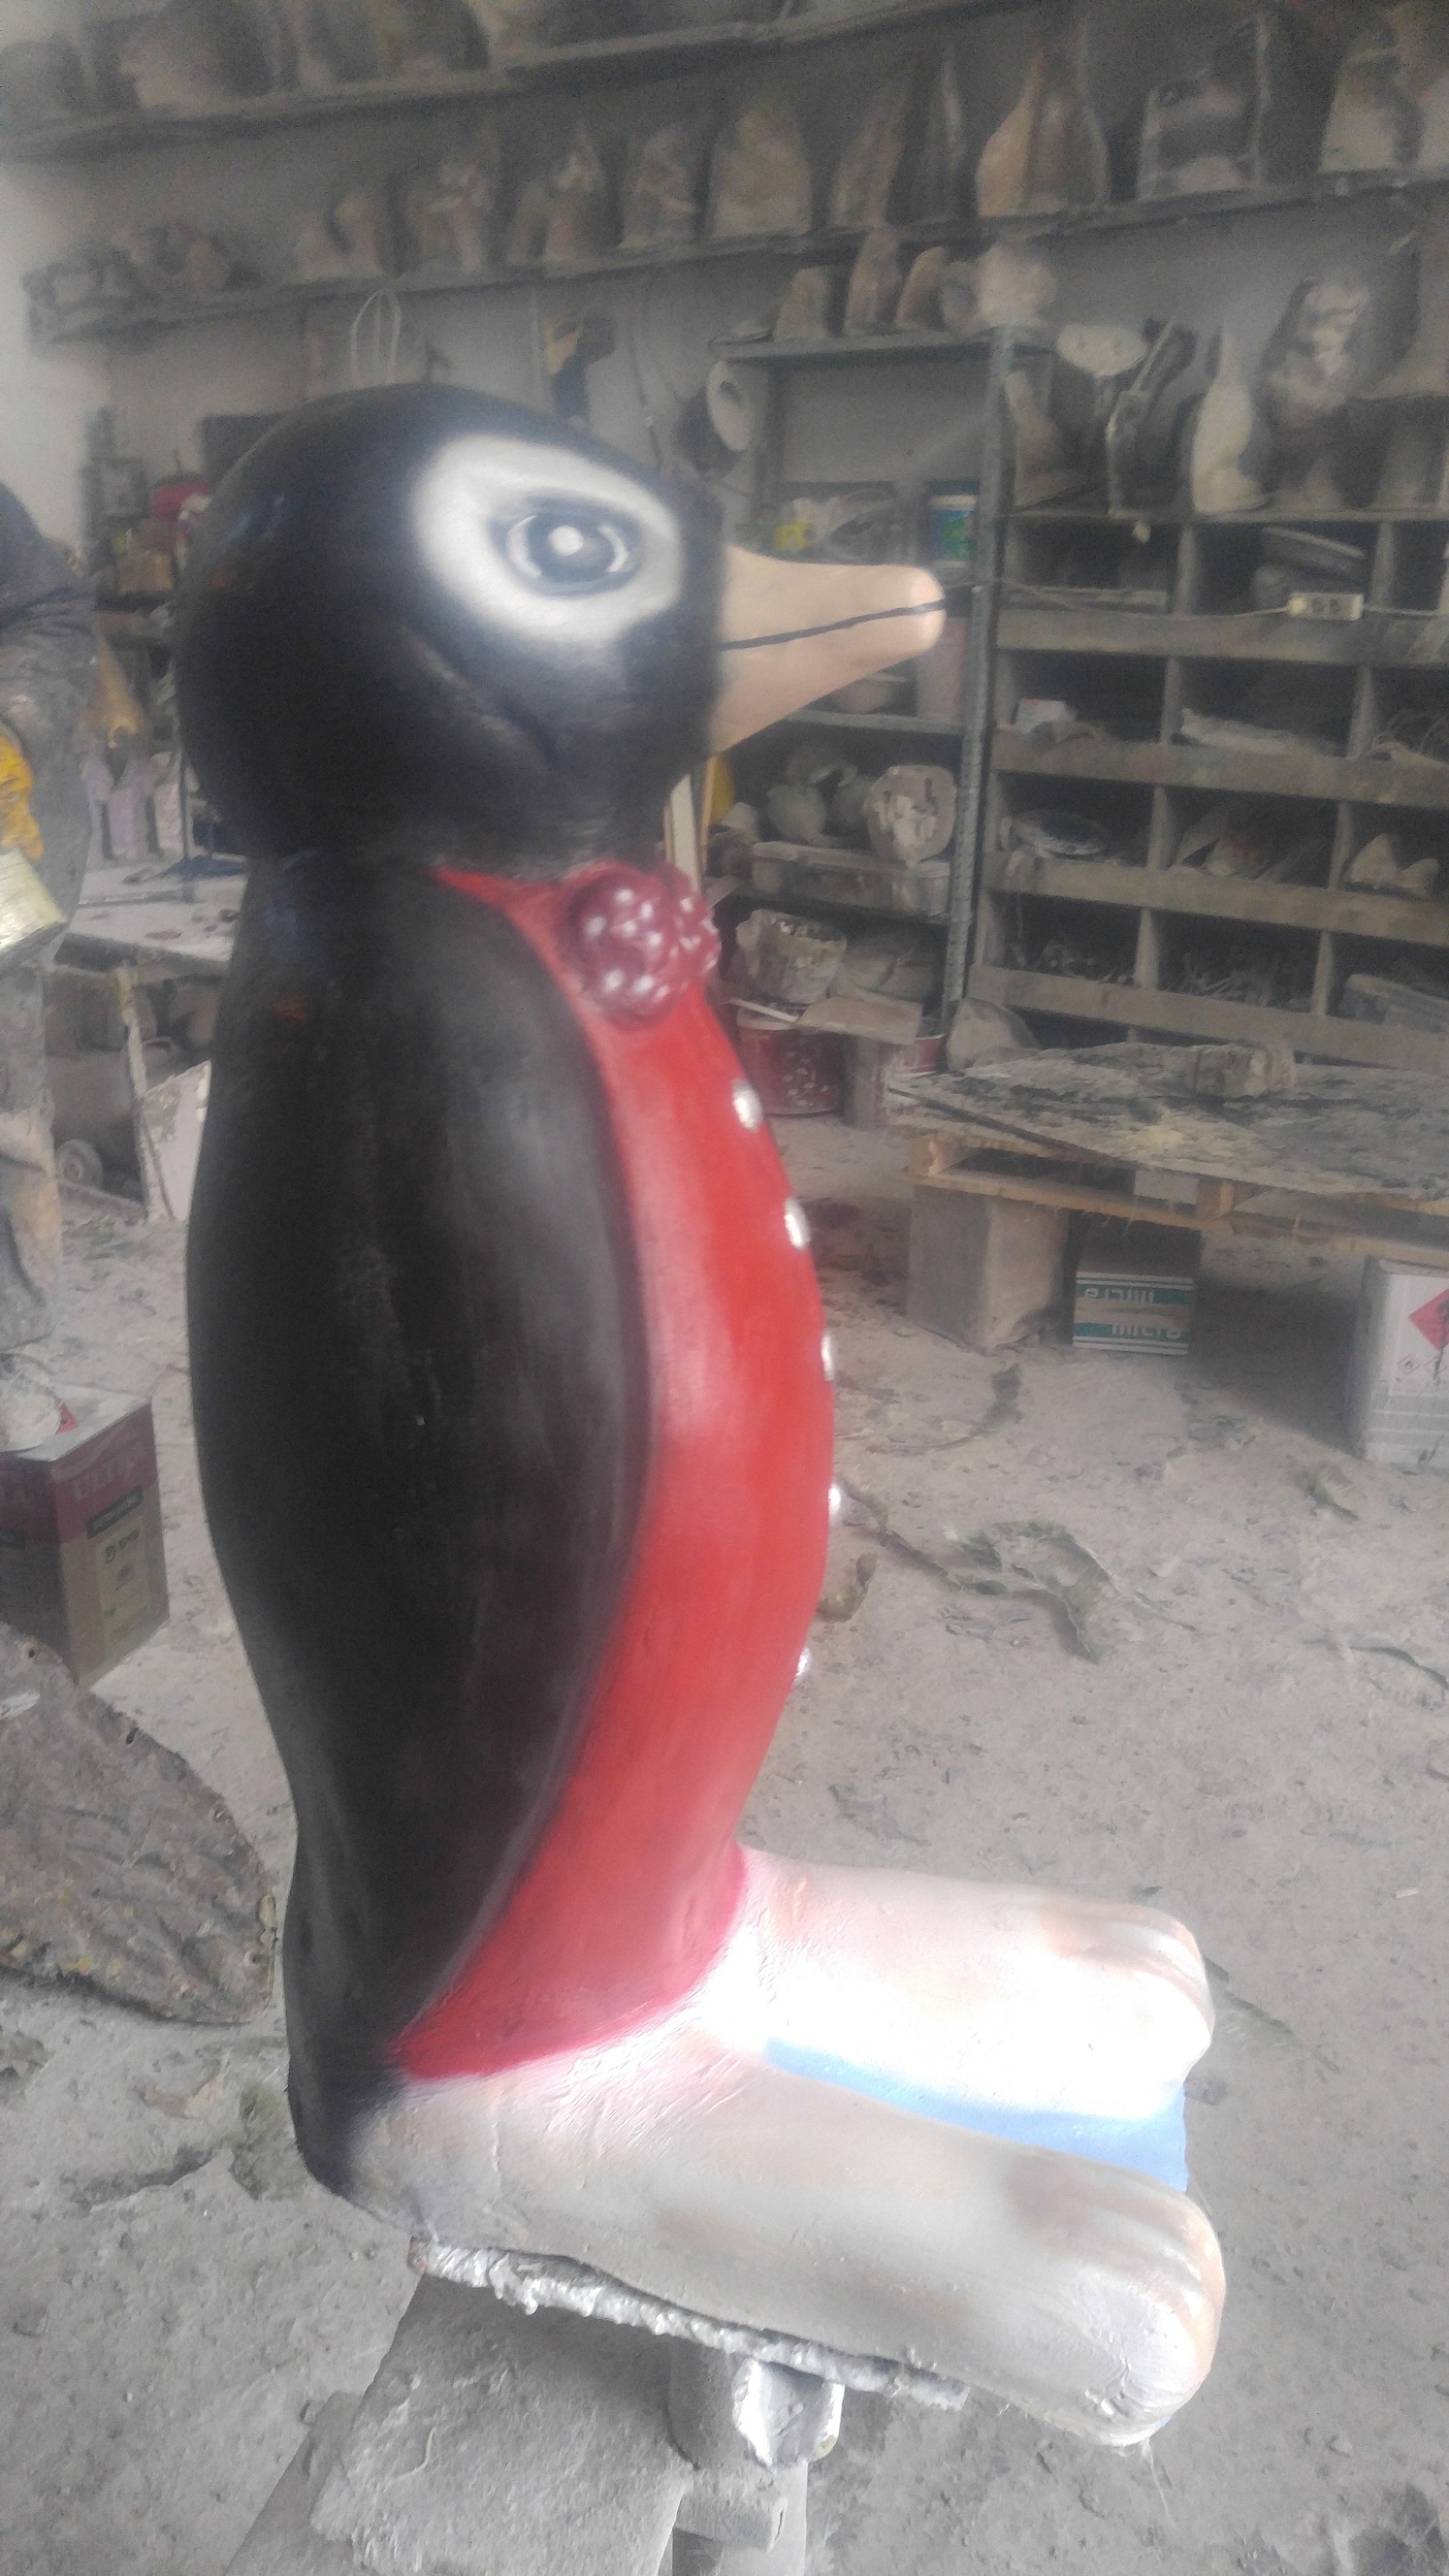 kuzey penguen: fiber en.45 boy.27 yüks.76 ağr.4